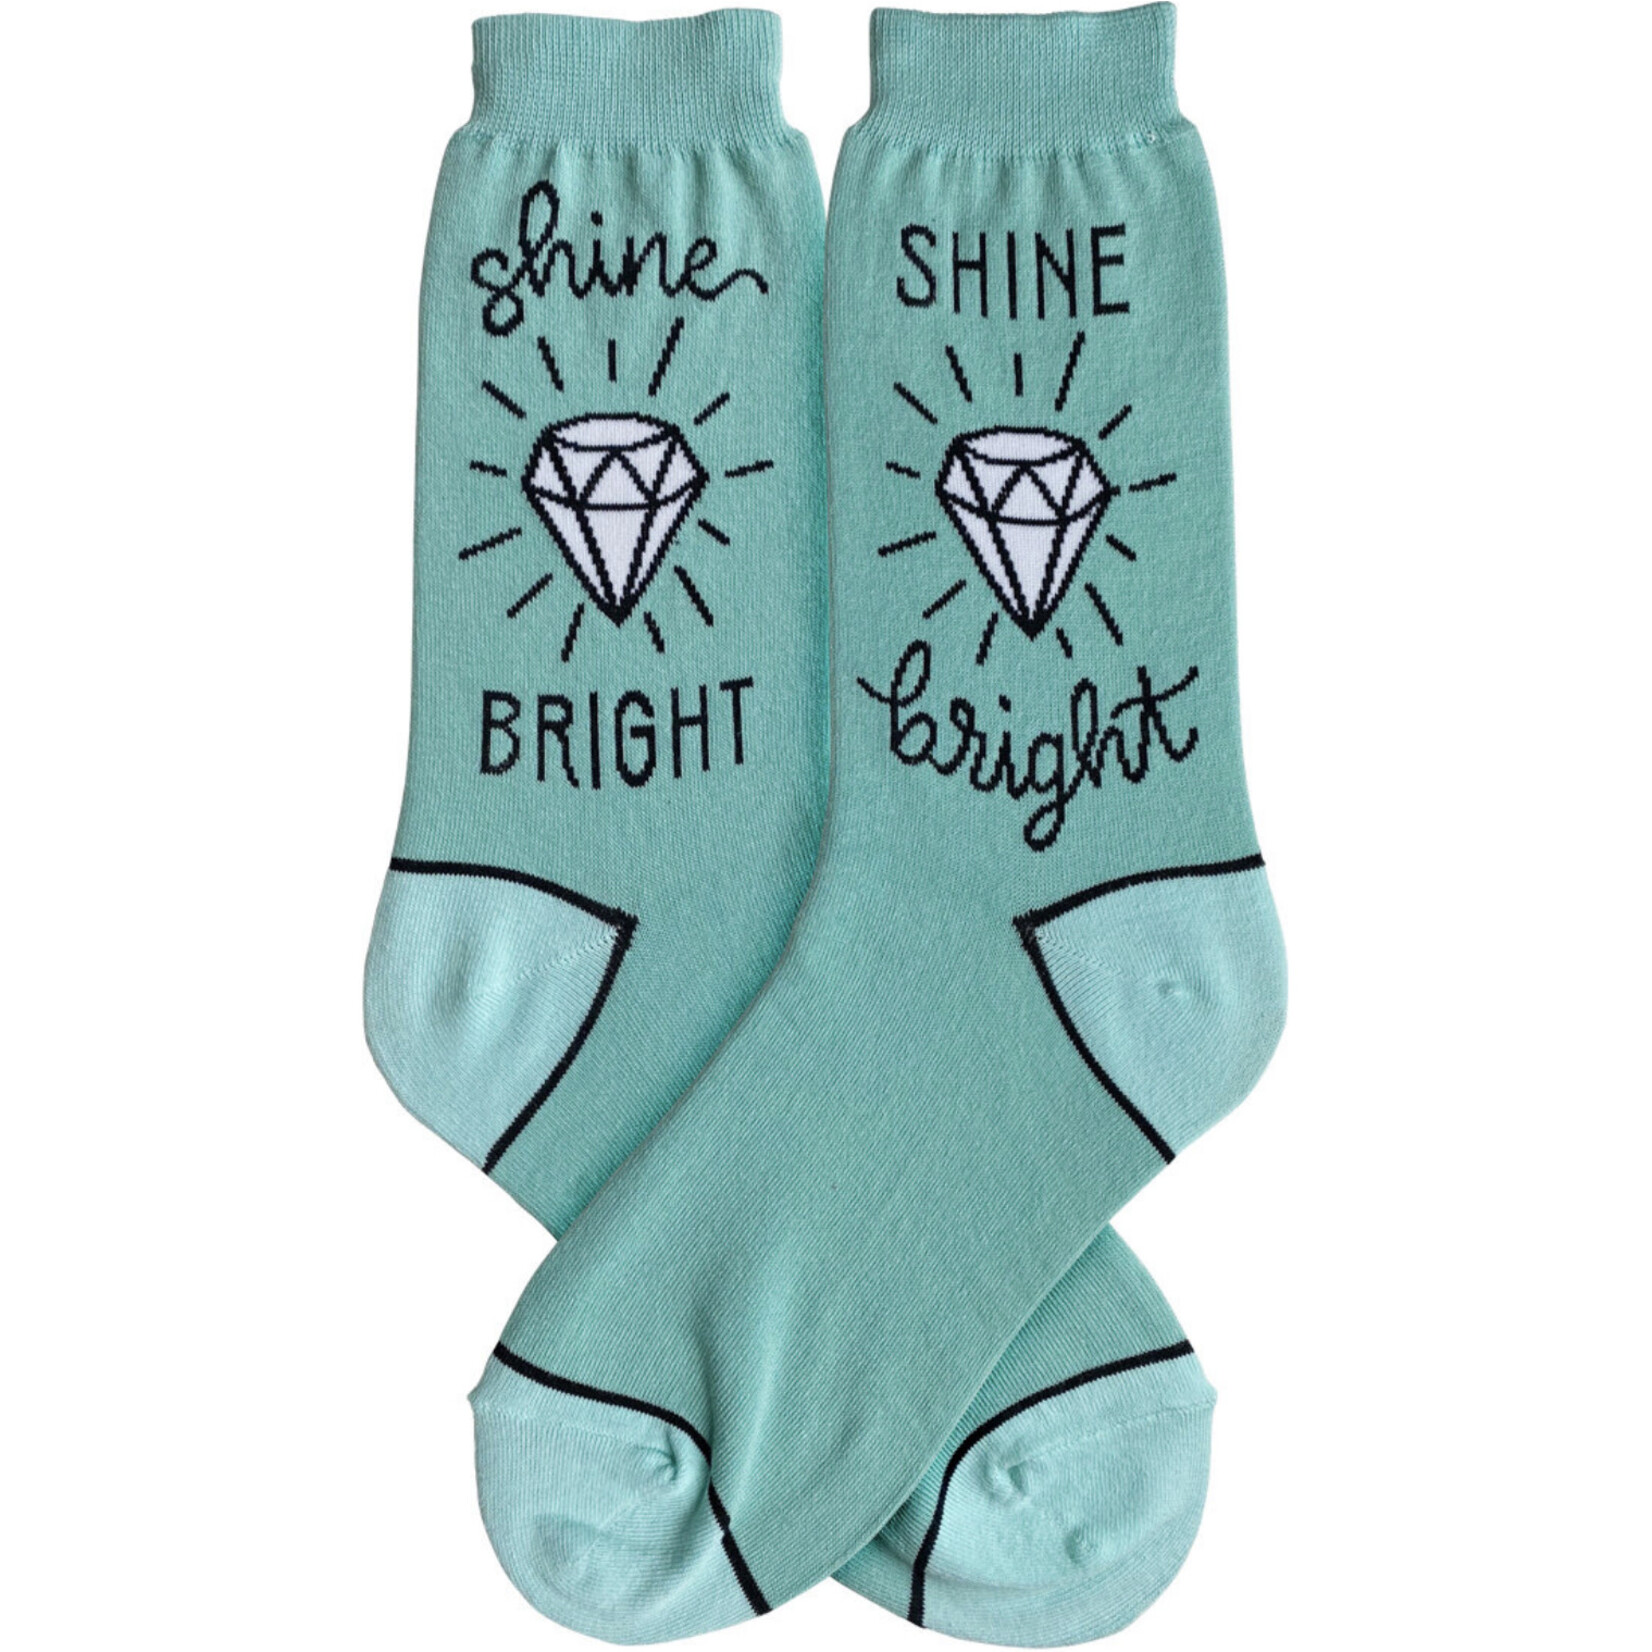 Socks (Women’s) - Shine Bright Diamond